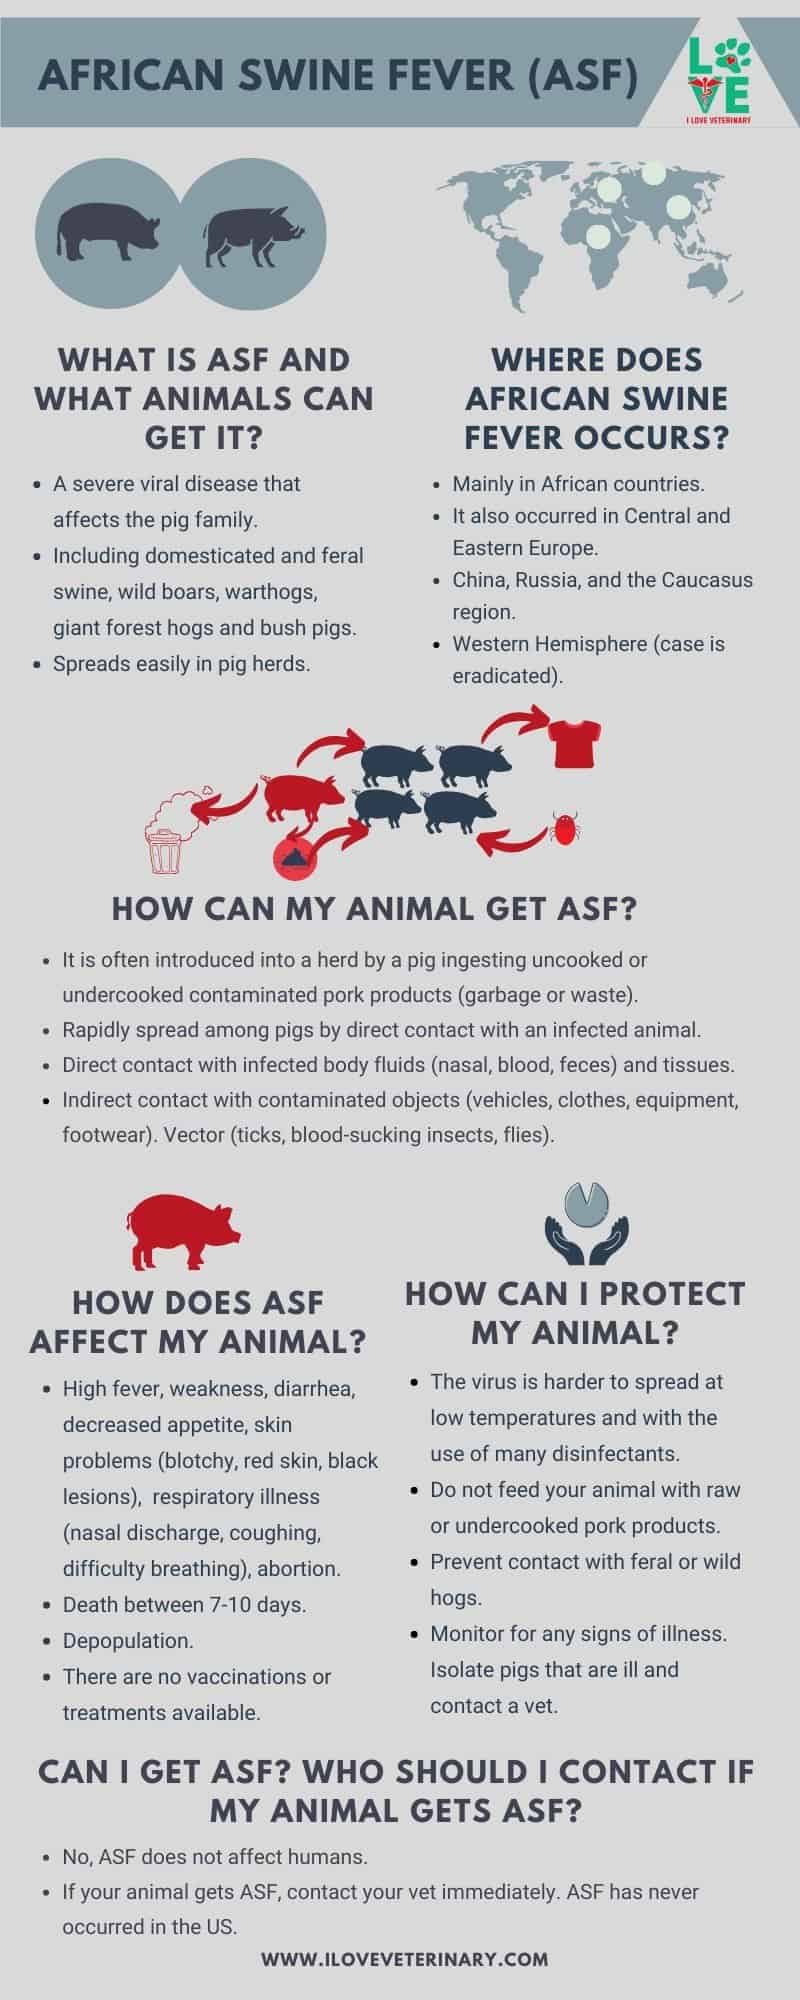 African Swine Fever factsheet infographic I Love Veterinary